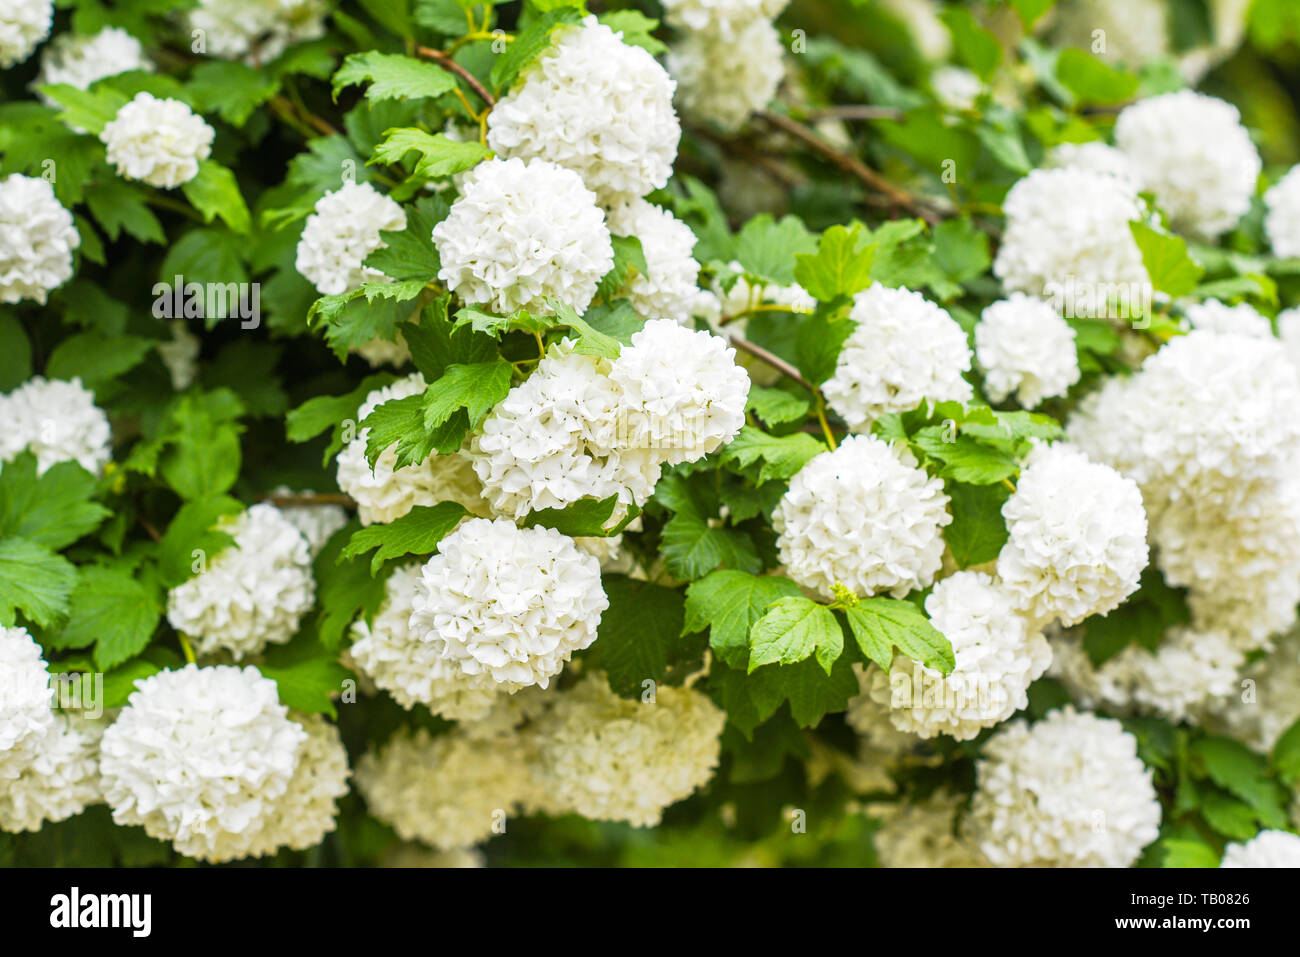 Blooming white balls of vibrunum flower in the spring garden. Stock Photo